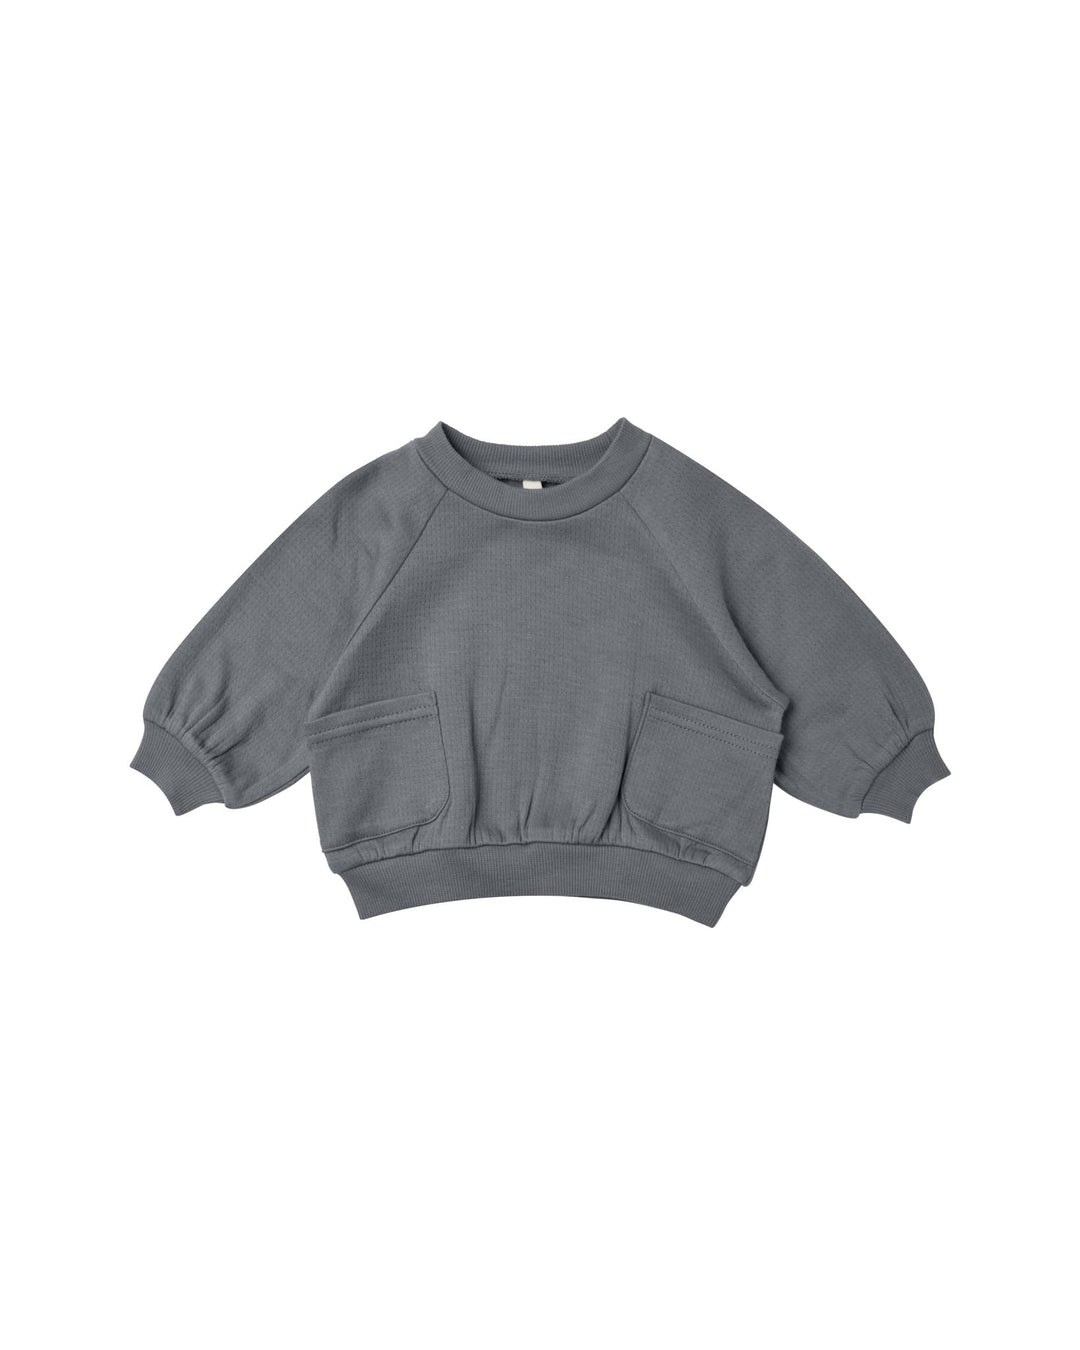 Quincy Mae Sweatshirt Pocket Sweatshirt - Navy